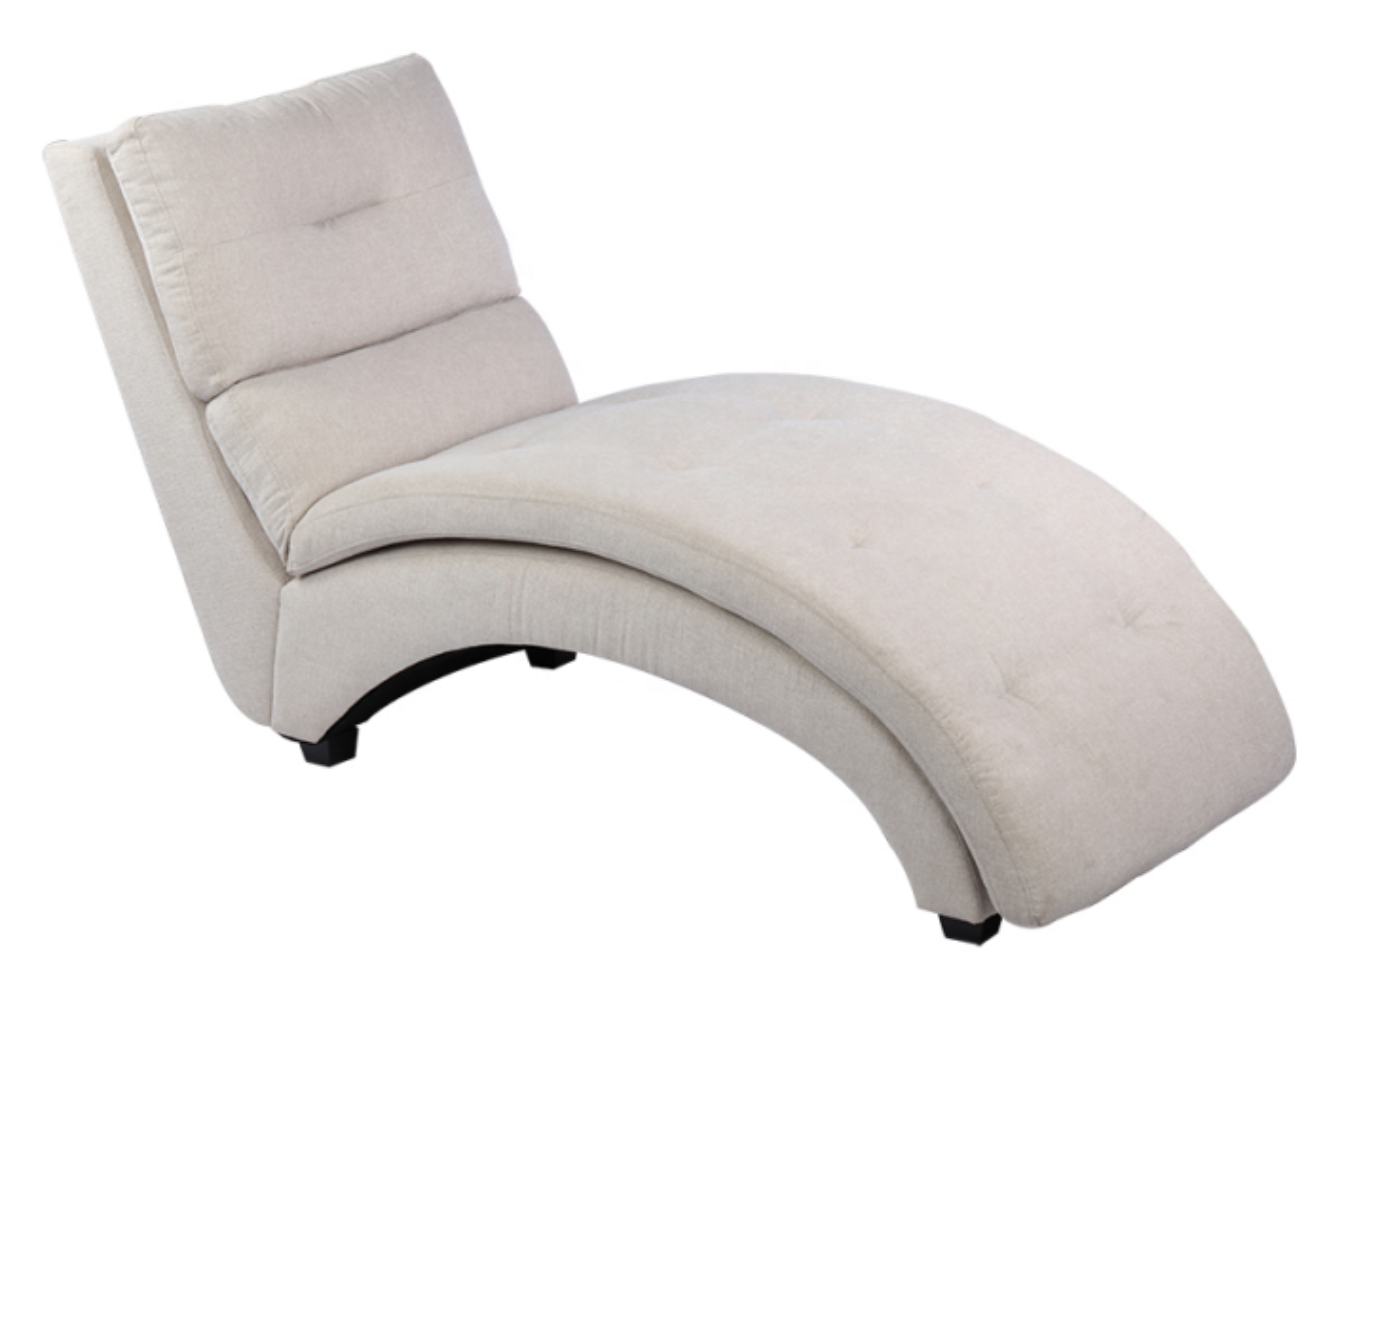 Optional Kingbird Furniture Company Brand 2 Seater Recliner Sofa Supplier 9